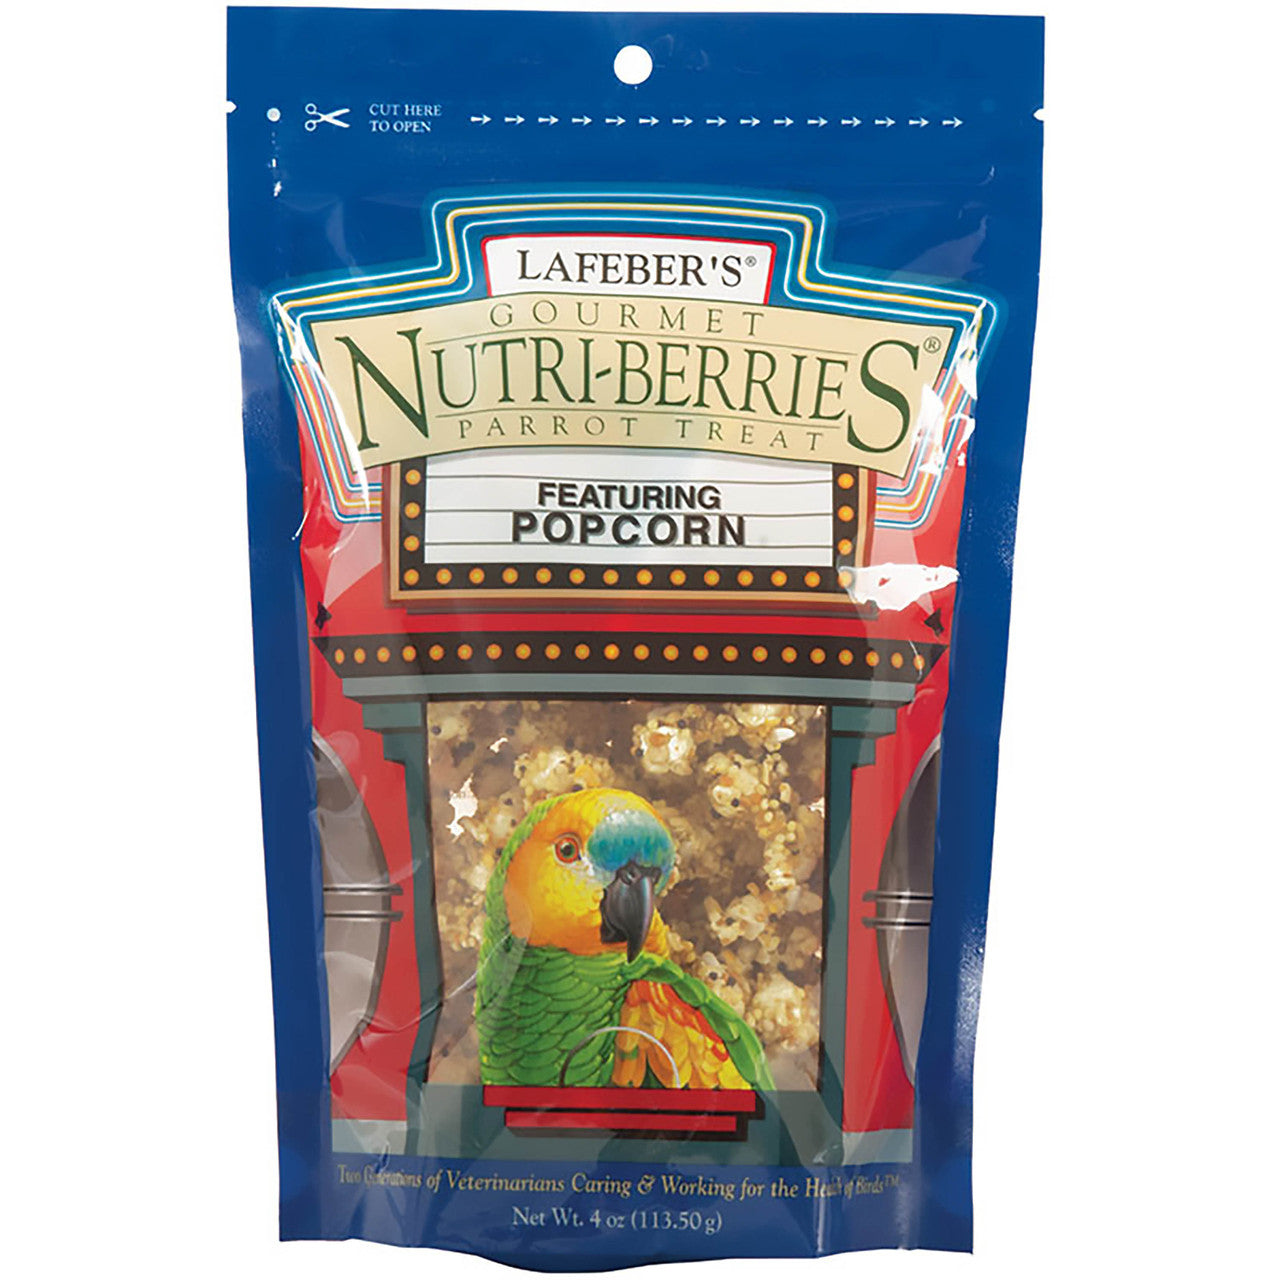 Lafeber Company Nutri-Berries Popcorn Parrot Treat 4oz